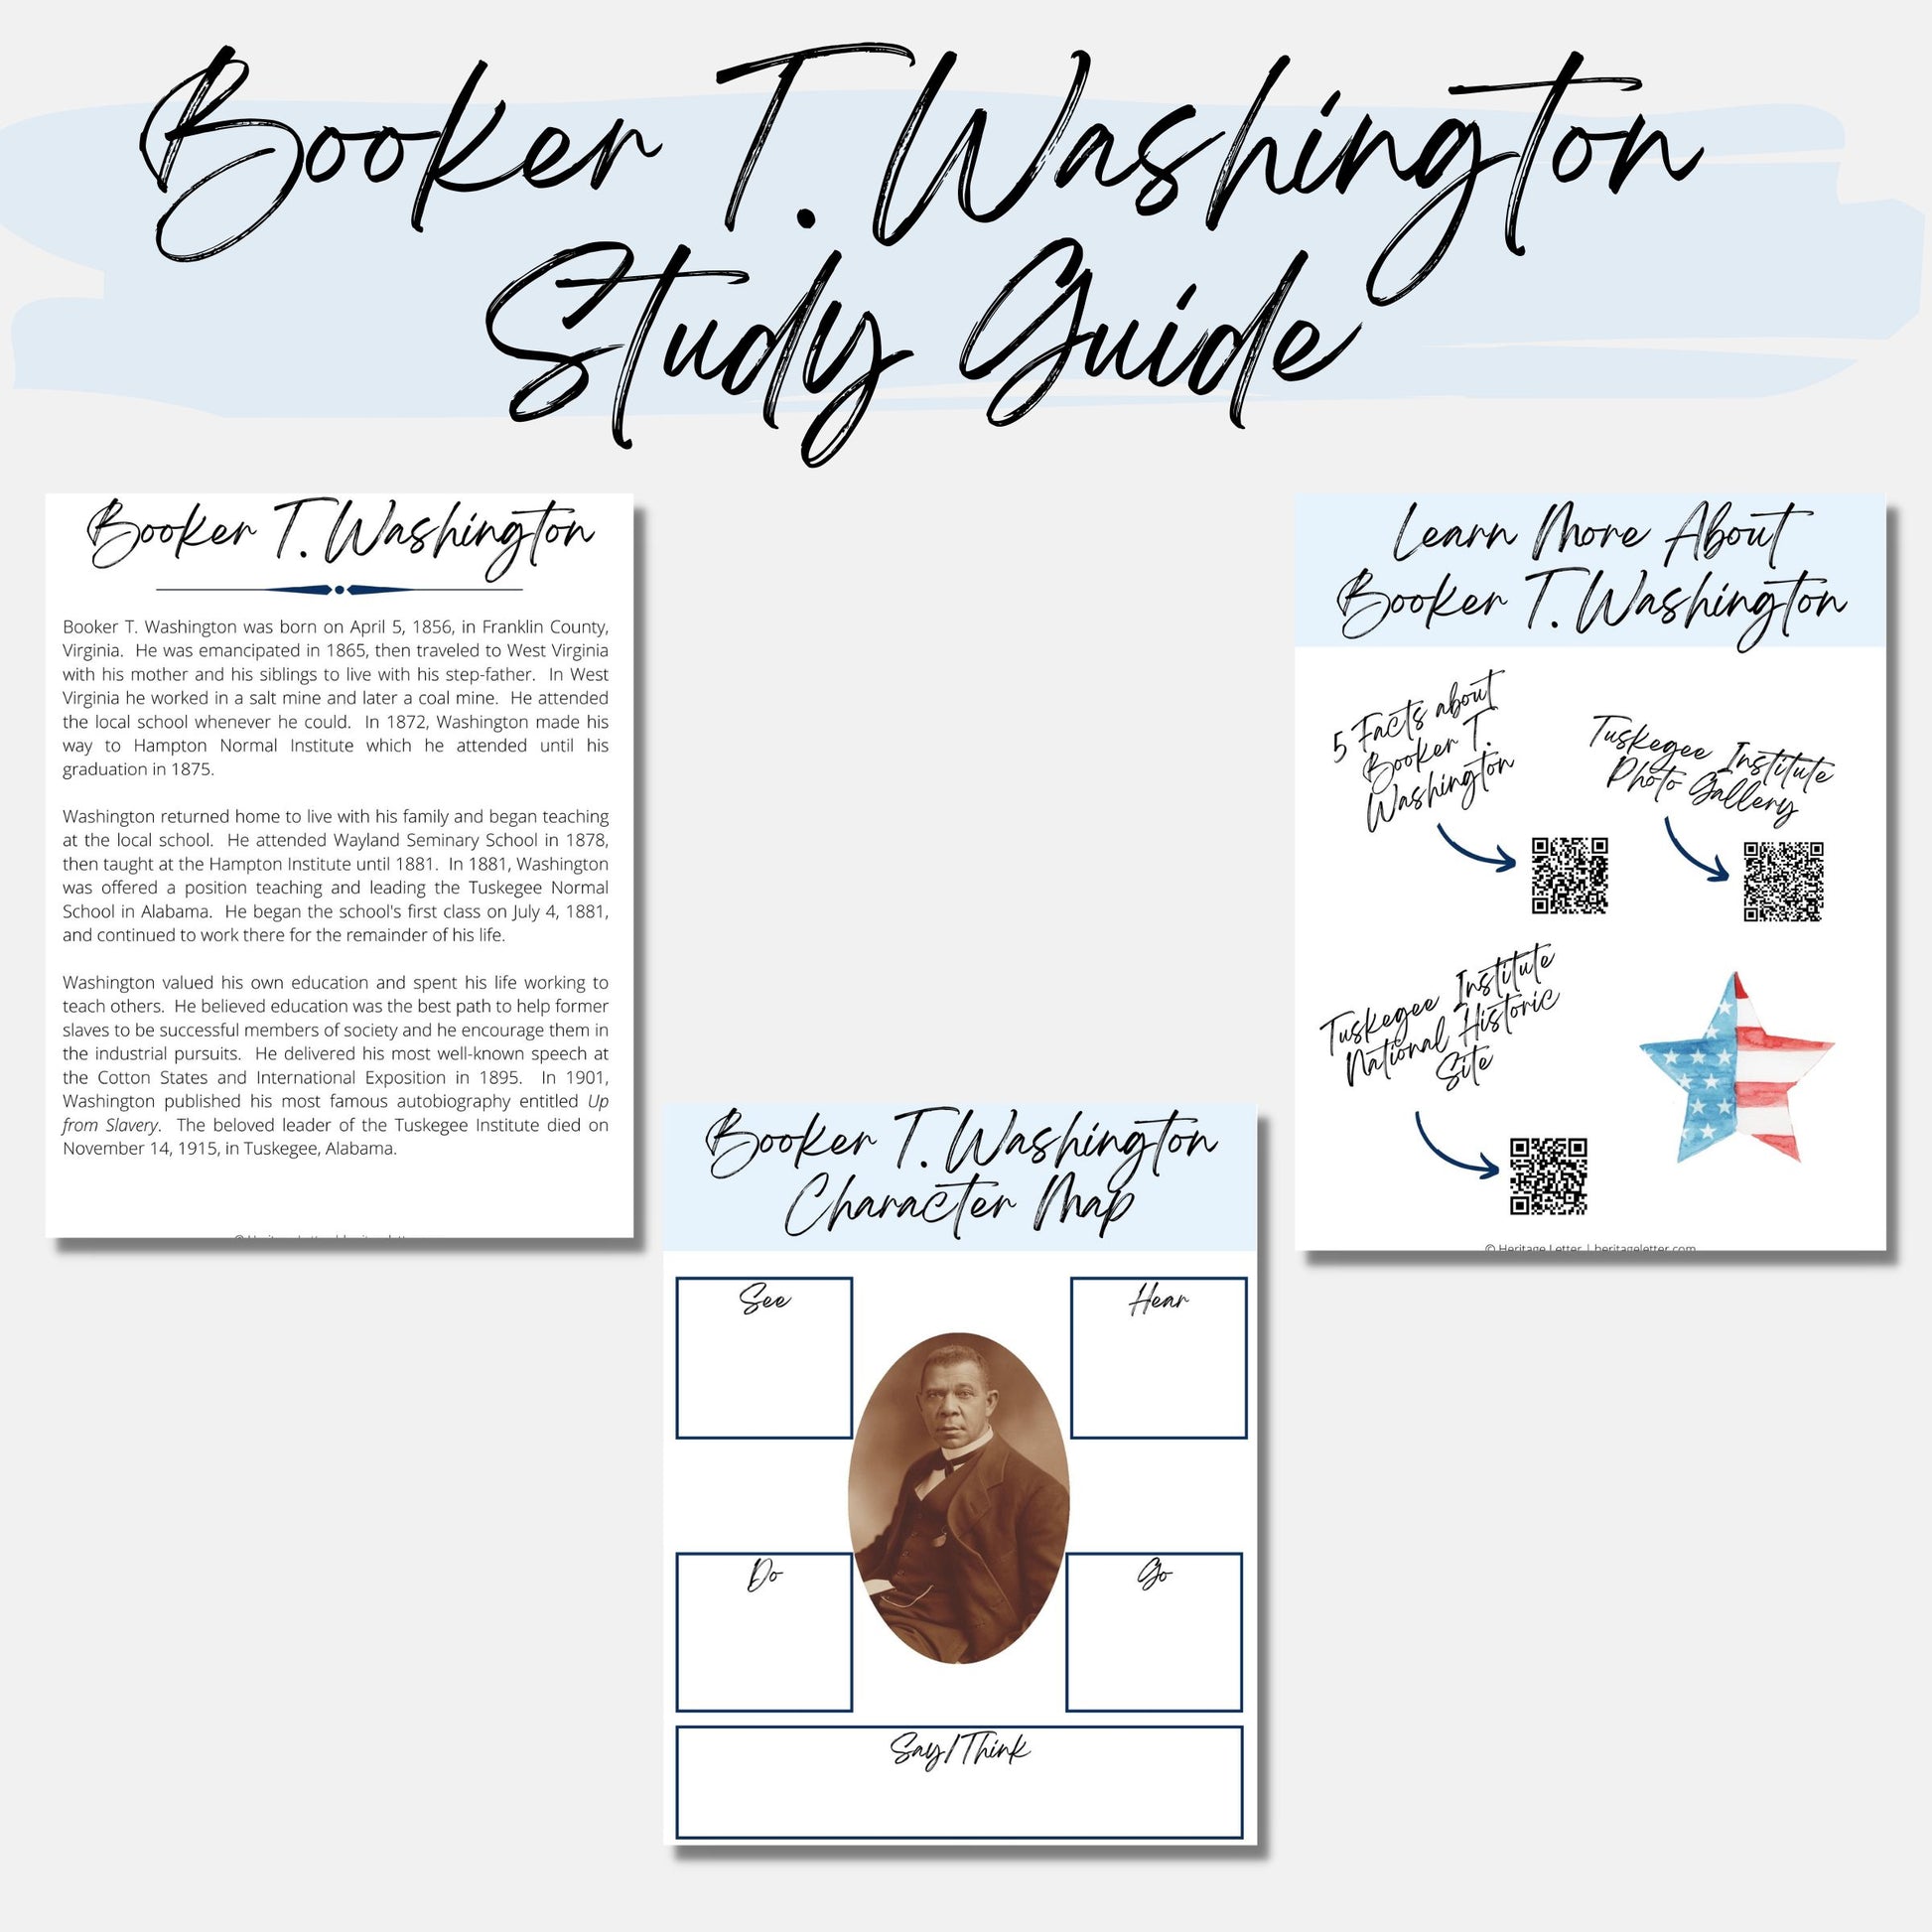 Booker T. Washington Study Guide